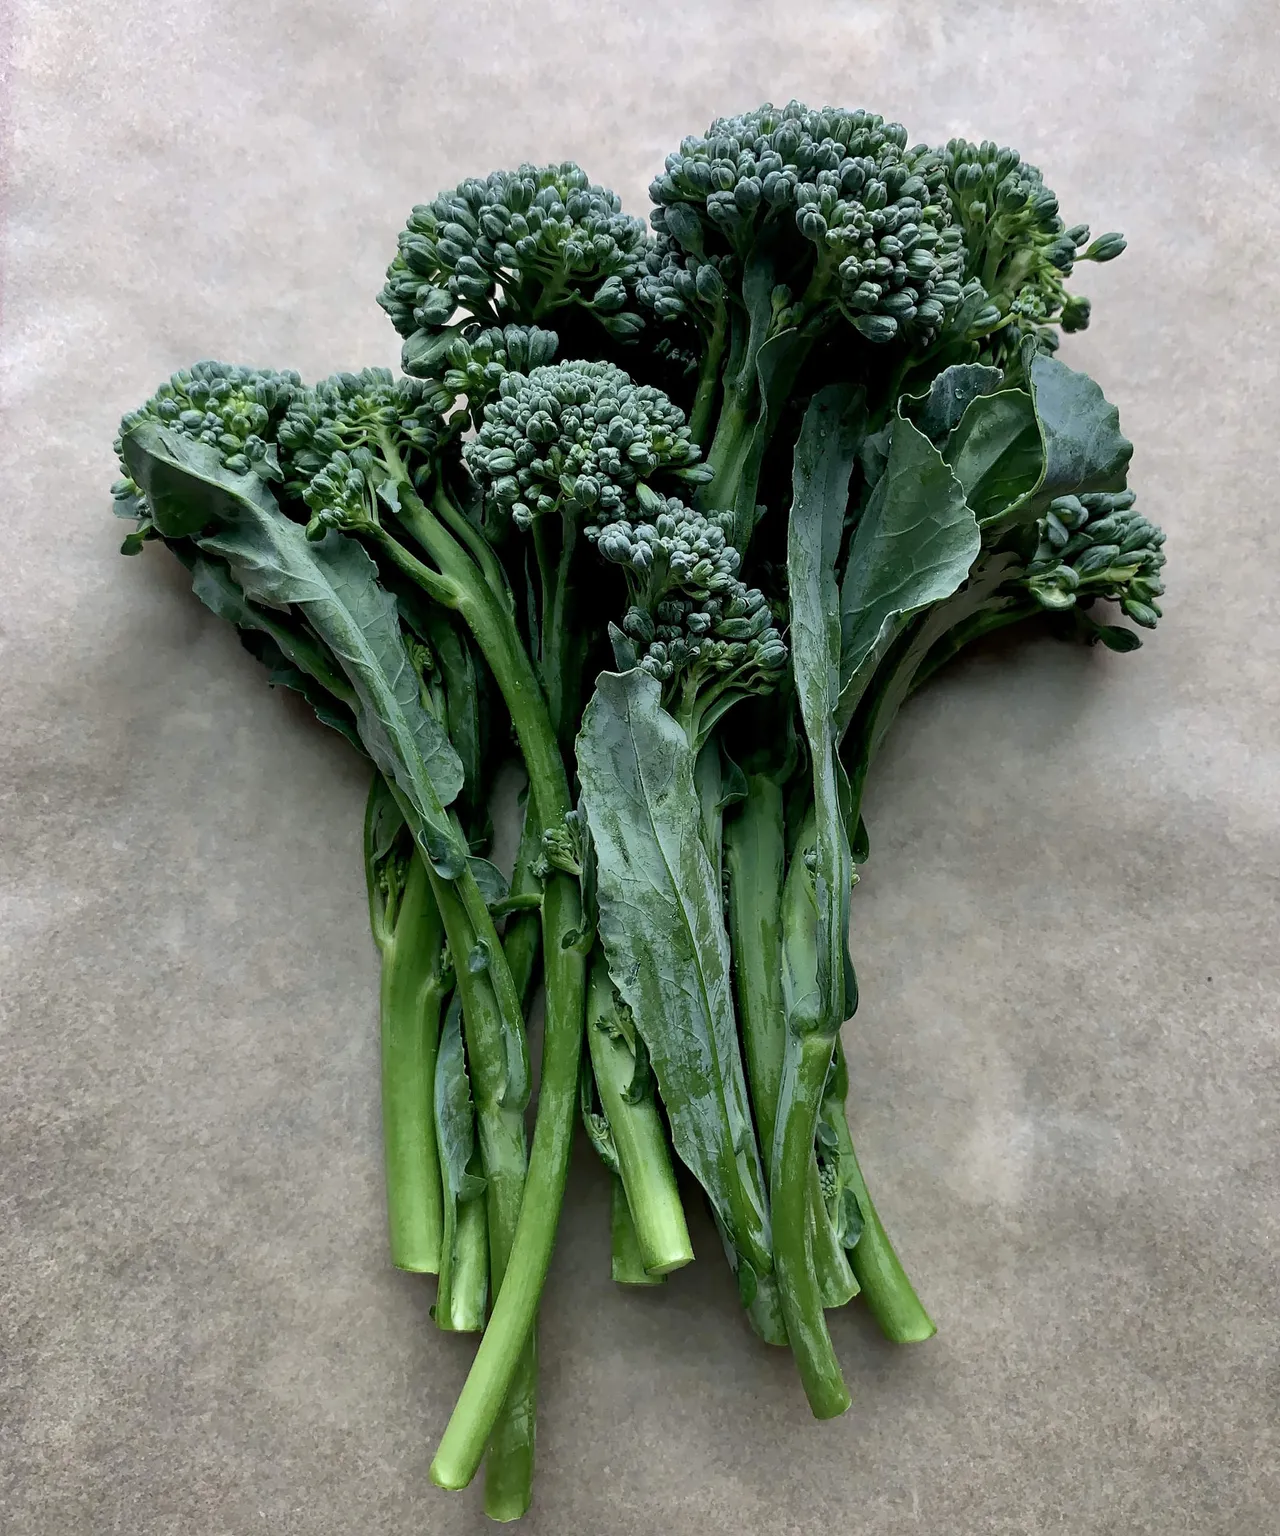 Homegrown Broccolini: Harvest Gourmet Vegetables